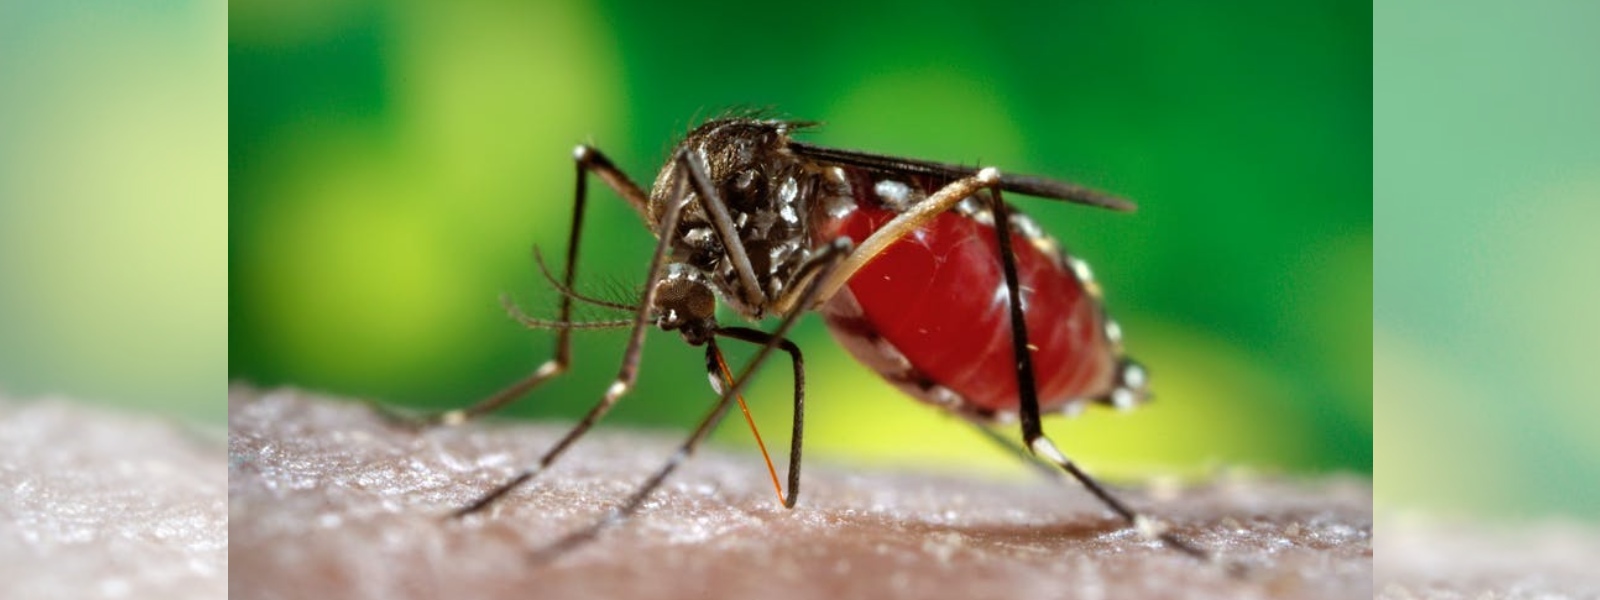 Dengue epidemic likely with monsoon season